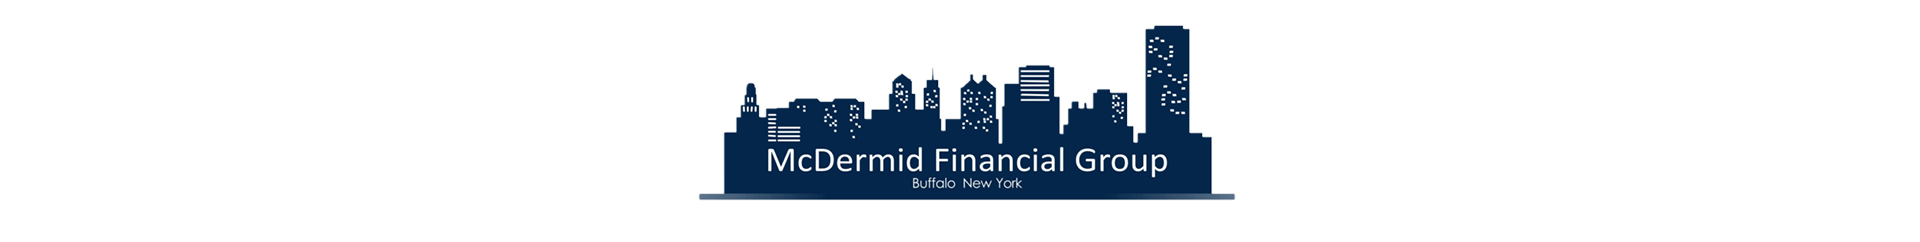 McDermid Financial Group